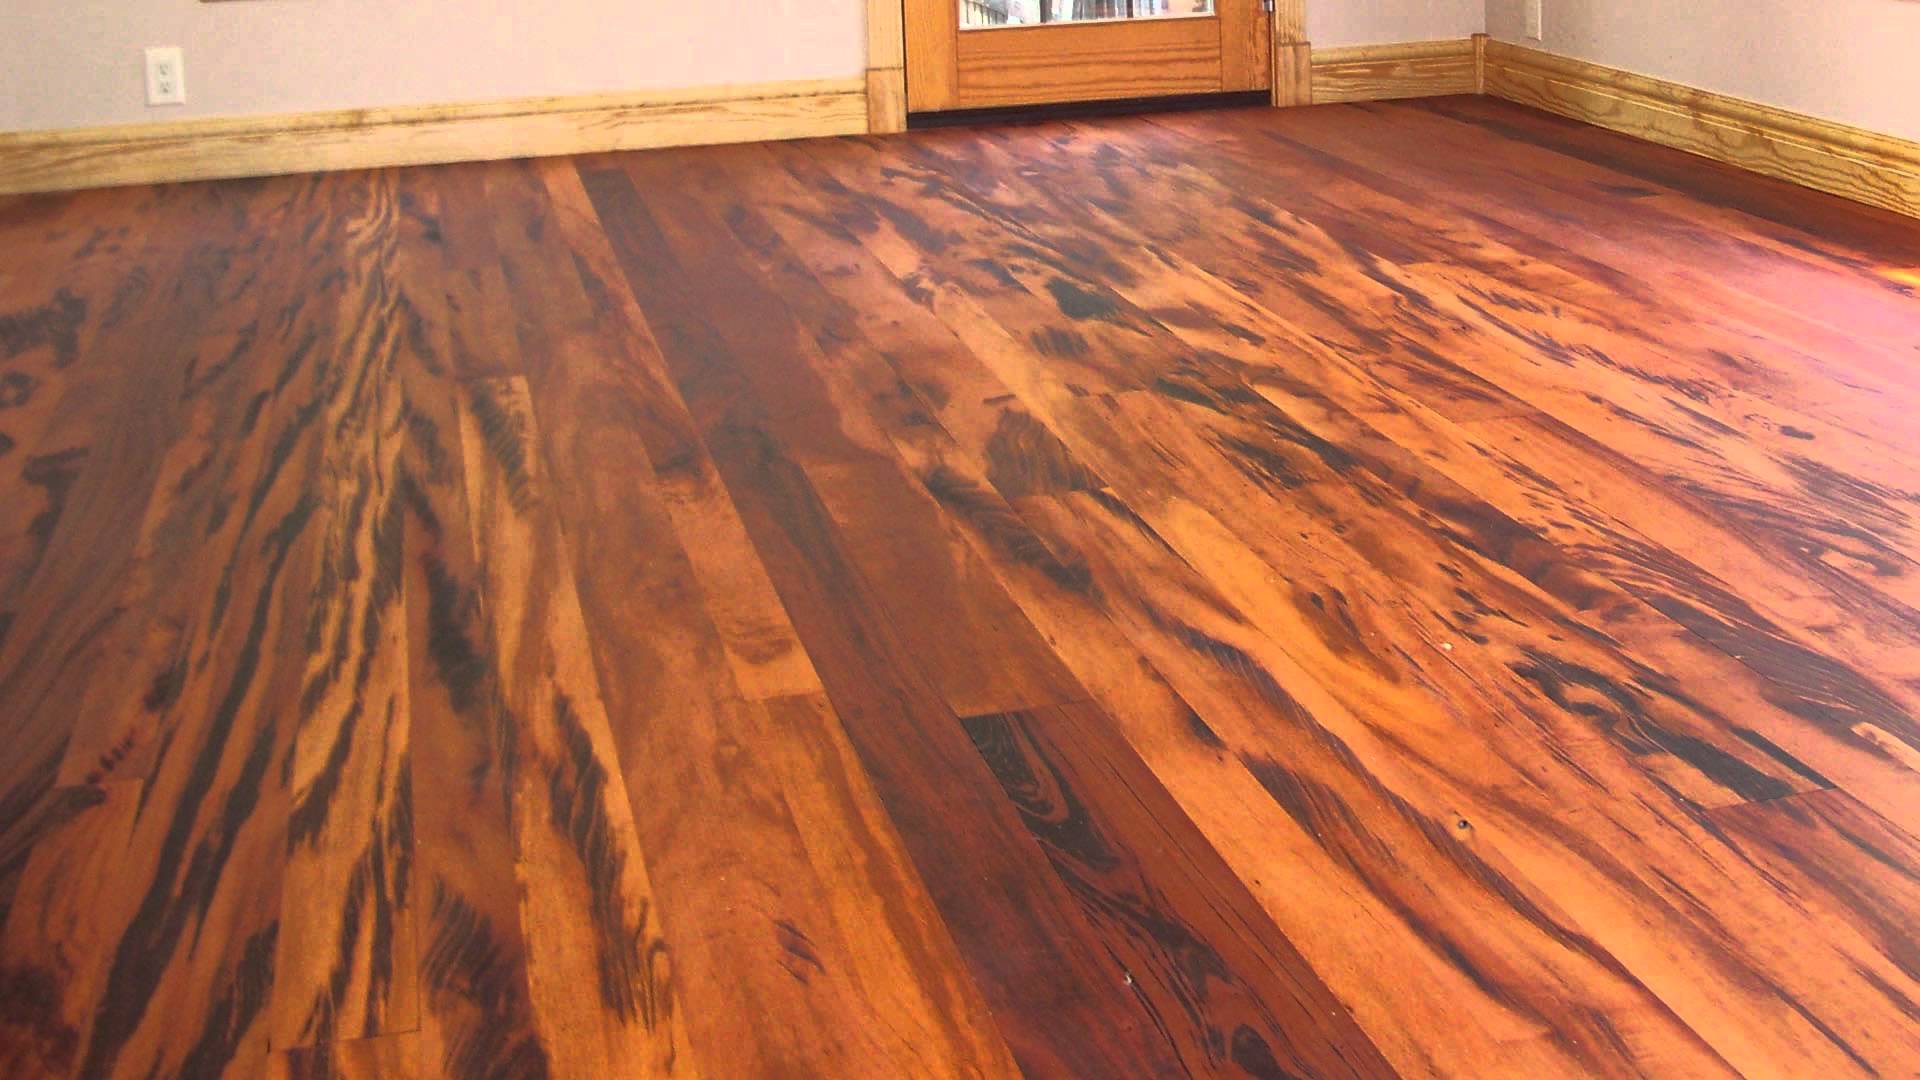 Canareno Professional Renovation Flooring, Brazilian Koa Hardwood Flooring Reviews